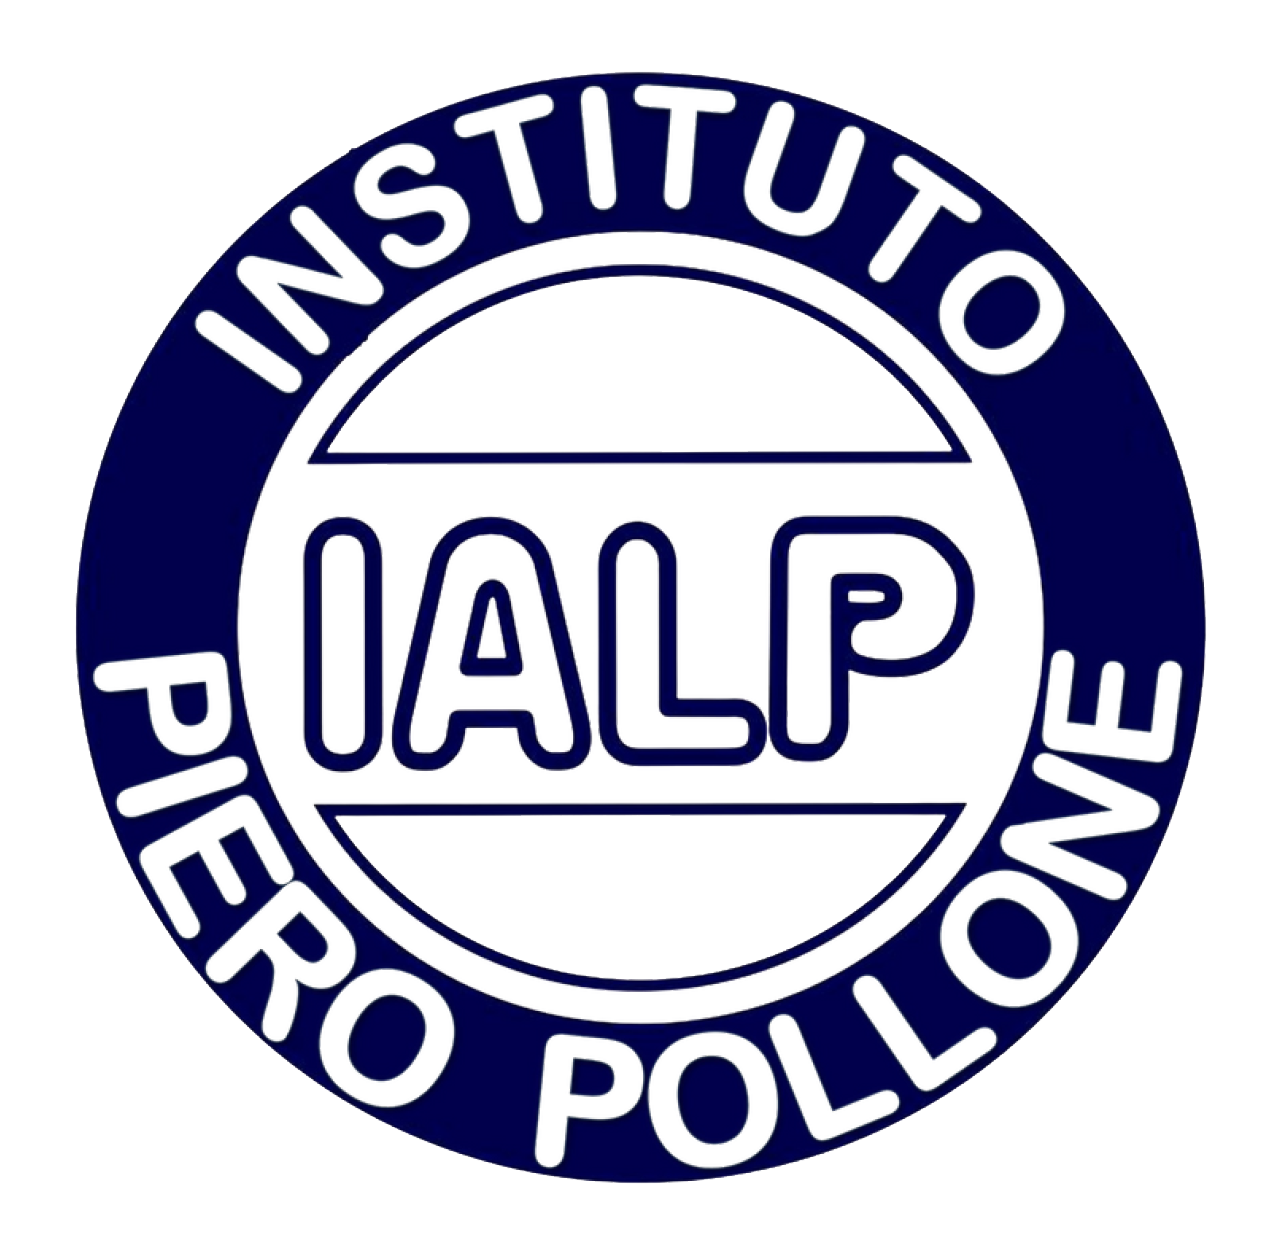 IALP – Instituto Piero Pollone